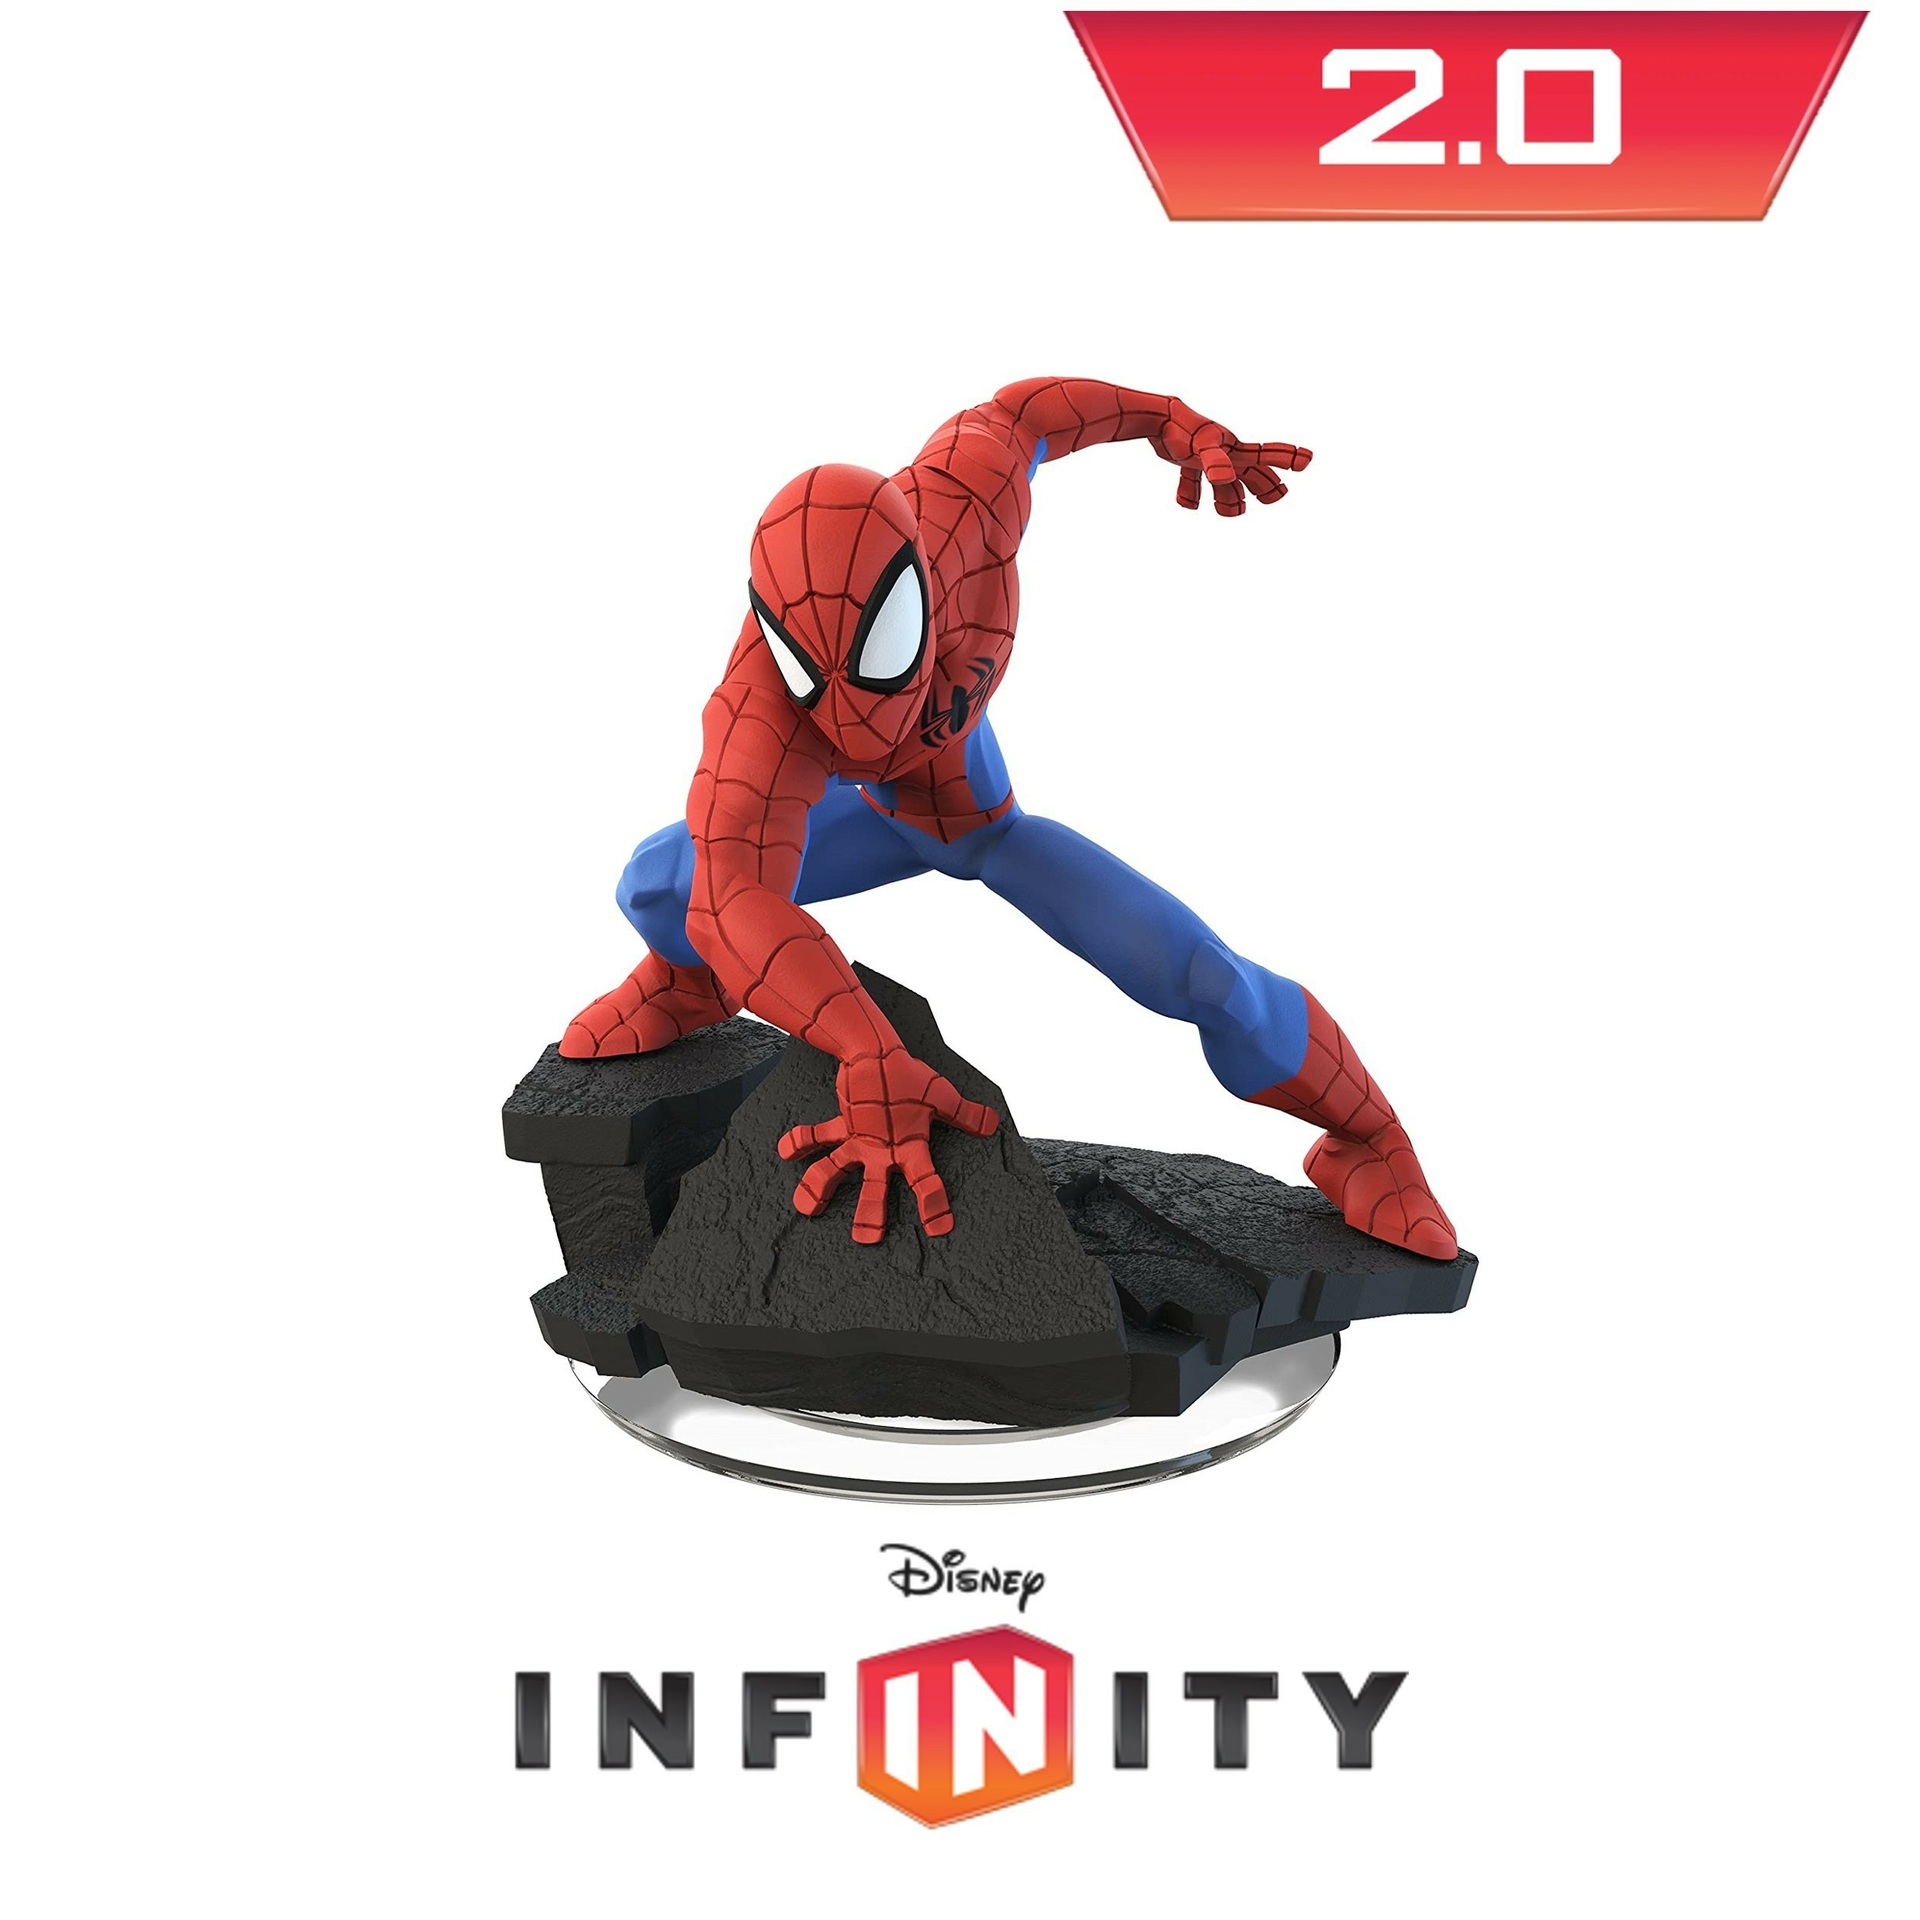 Disney Infinity - Spider-Man - Xbox 360 Hardware